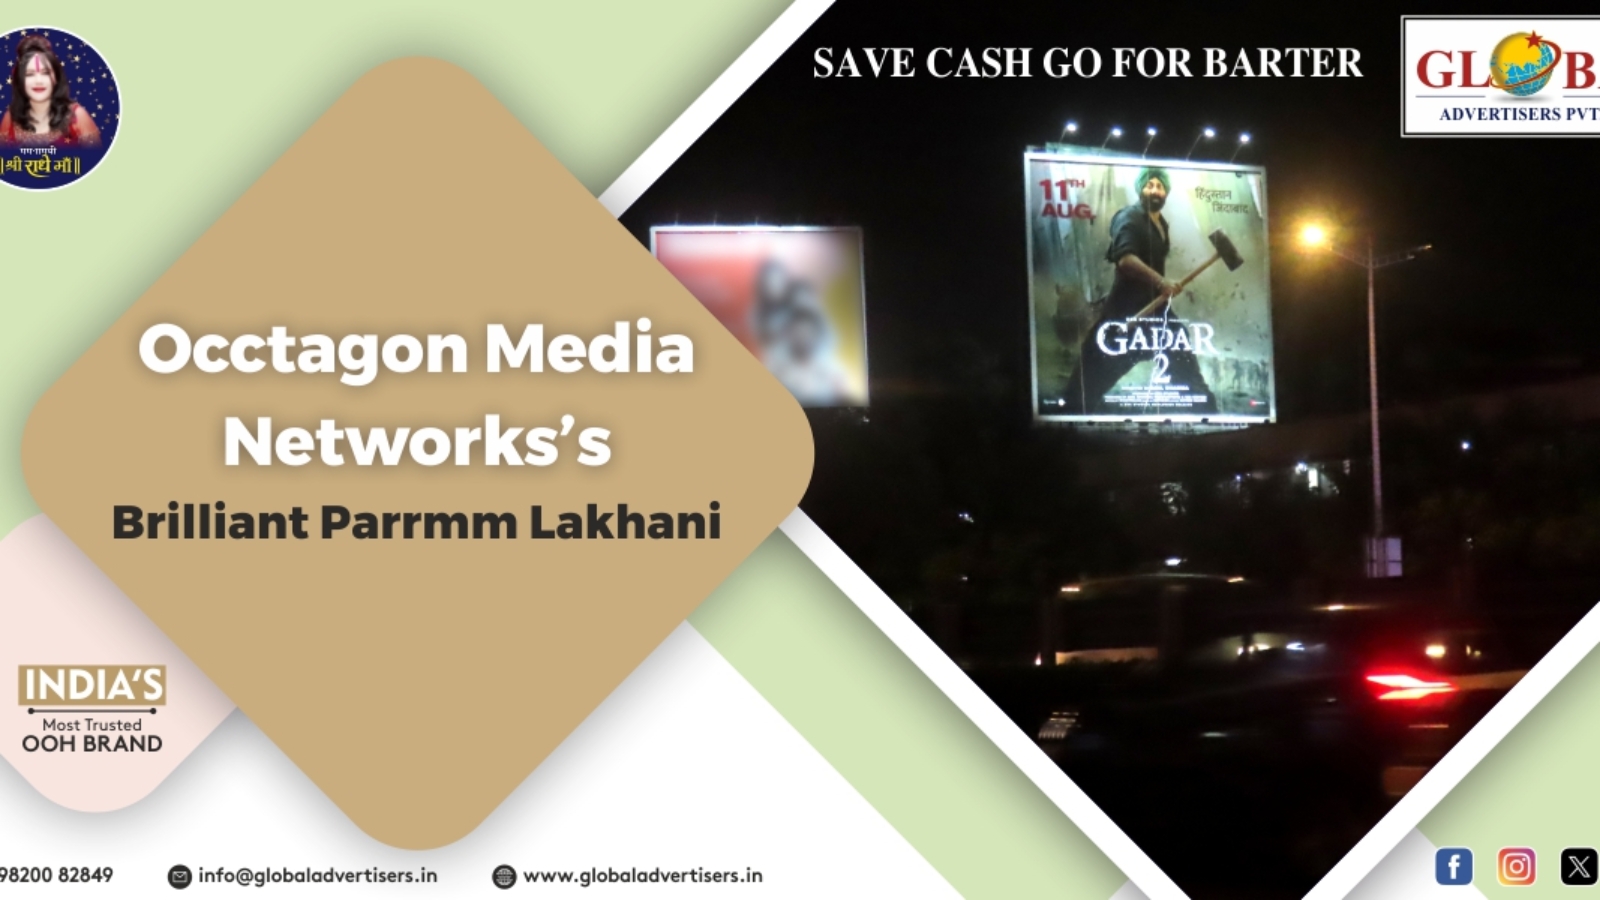 Occtagon-Media-Networkss-brilliant-Parrmm-Lakhani